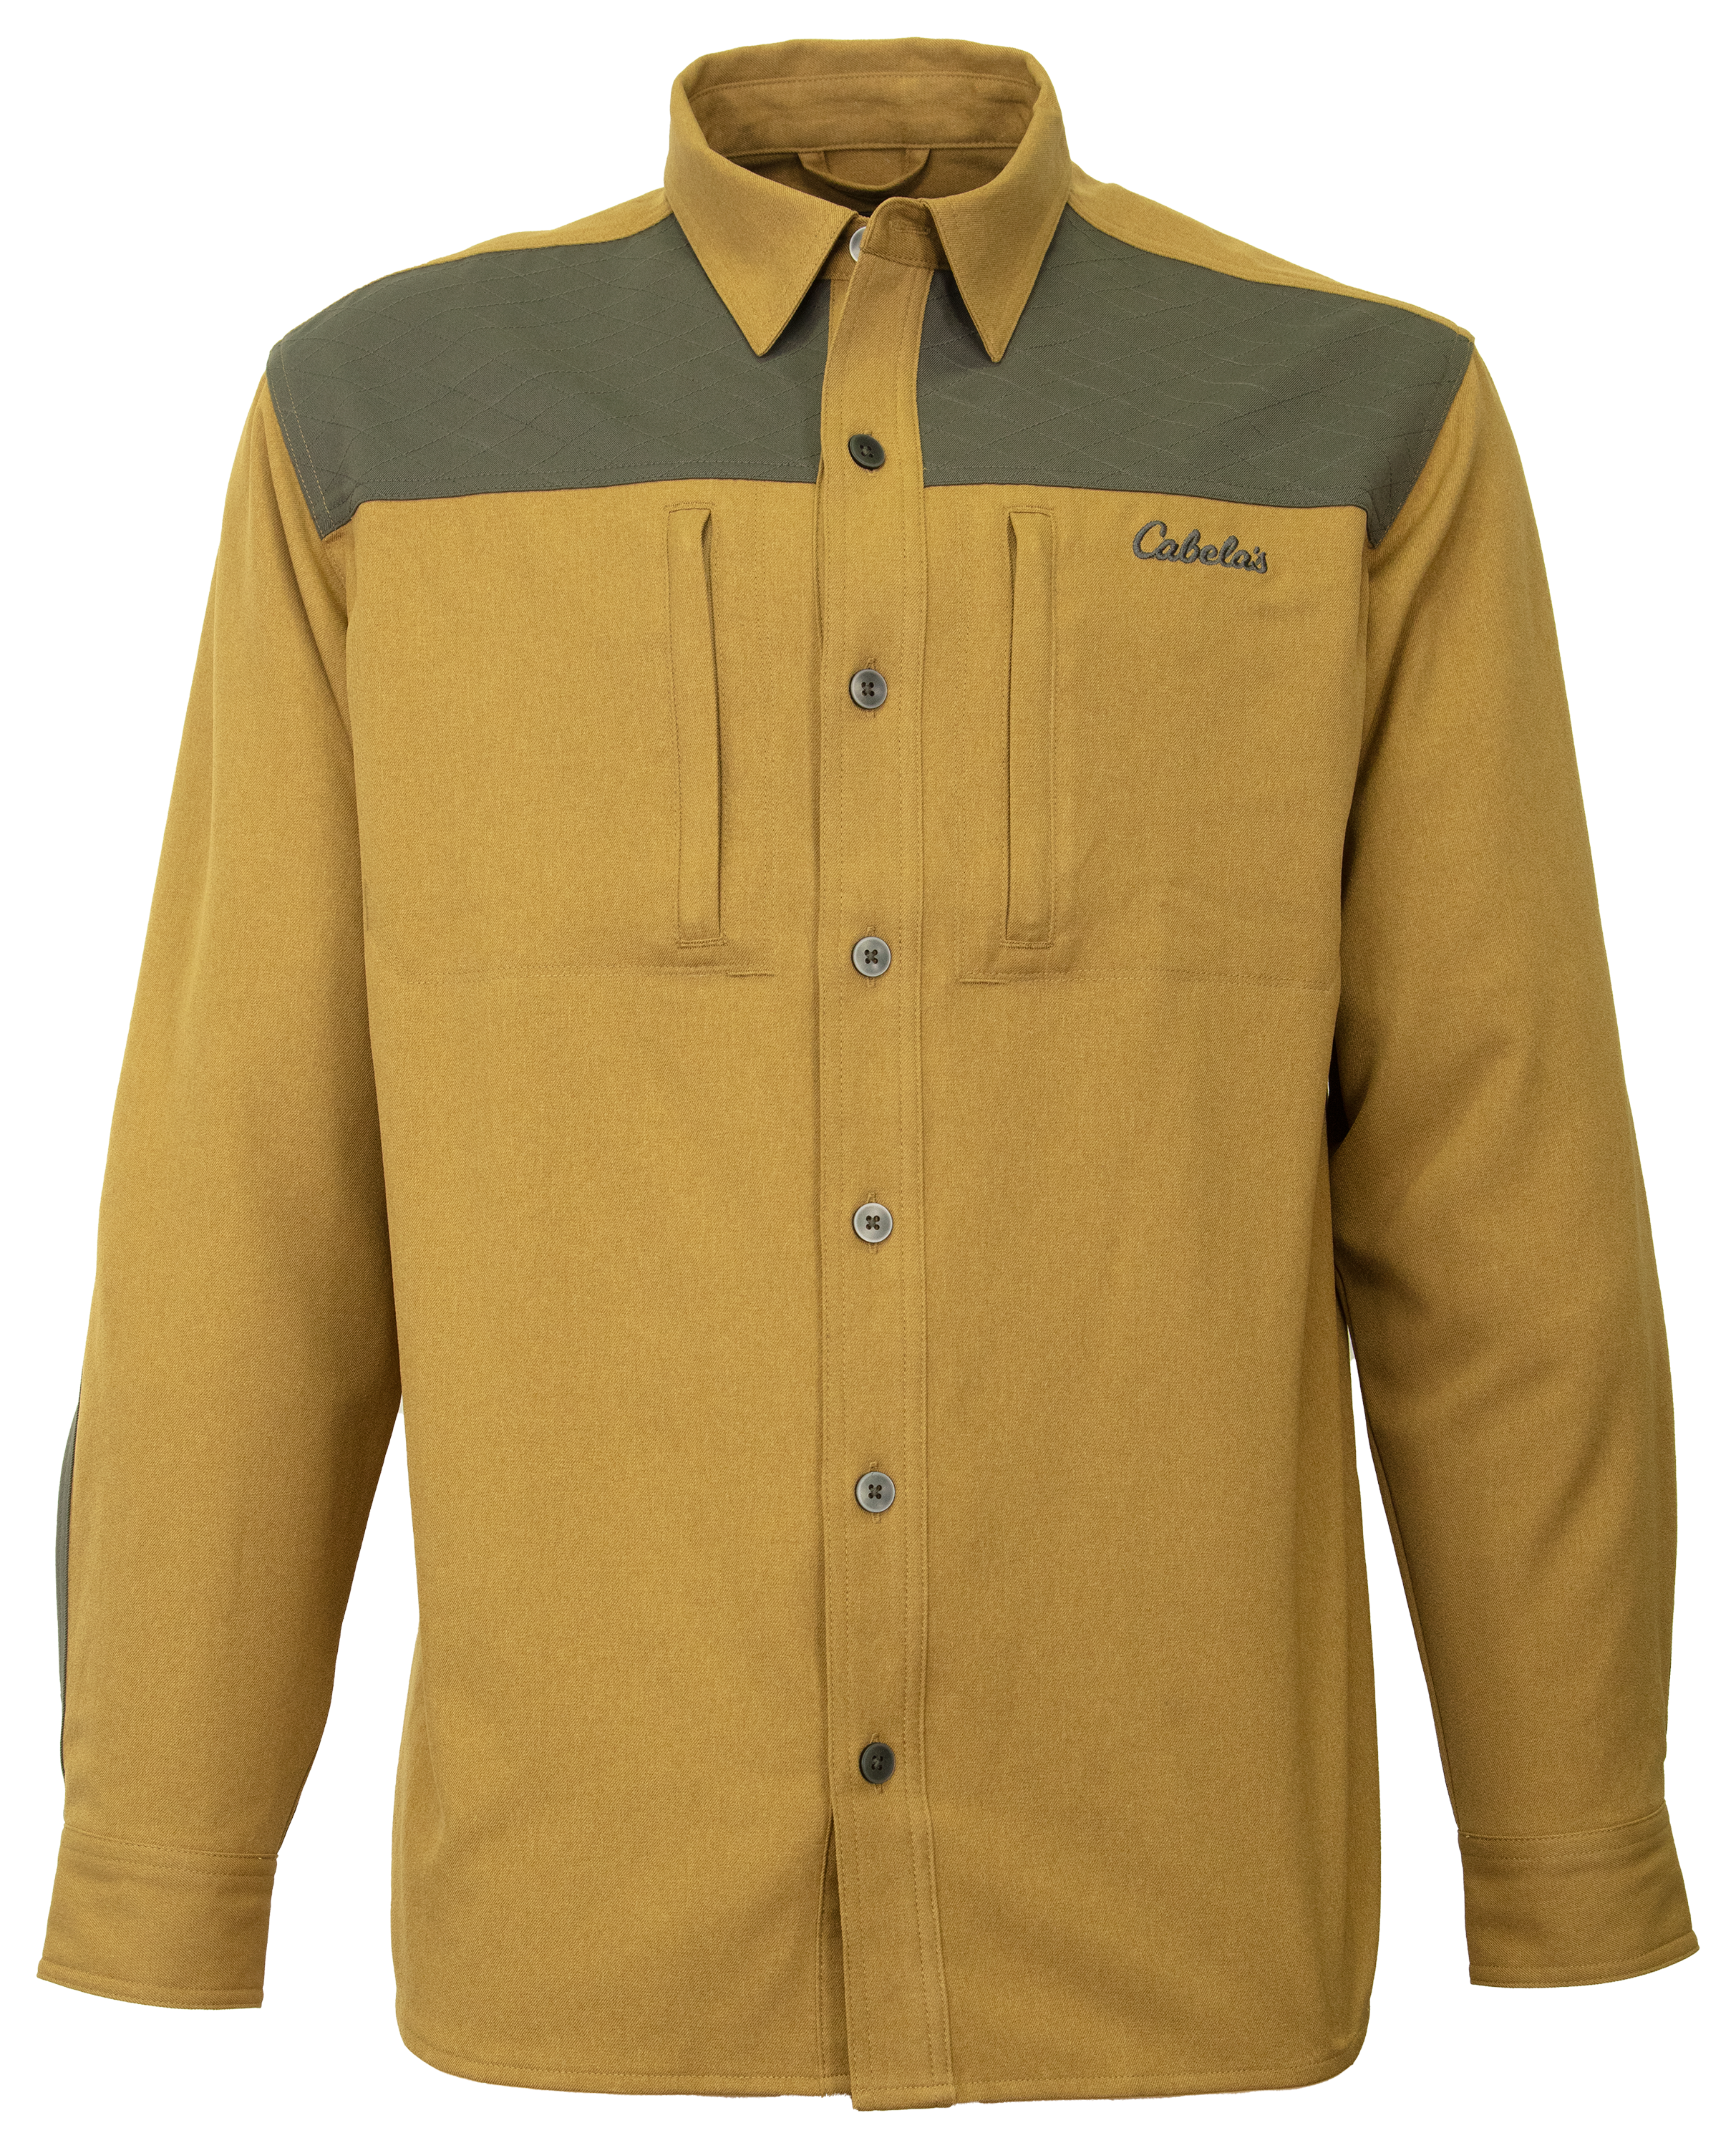 Cabela's Hunting Shirt for Men - Beluga w/Dull Gold Overlay - 3XL